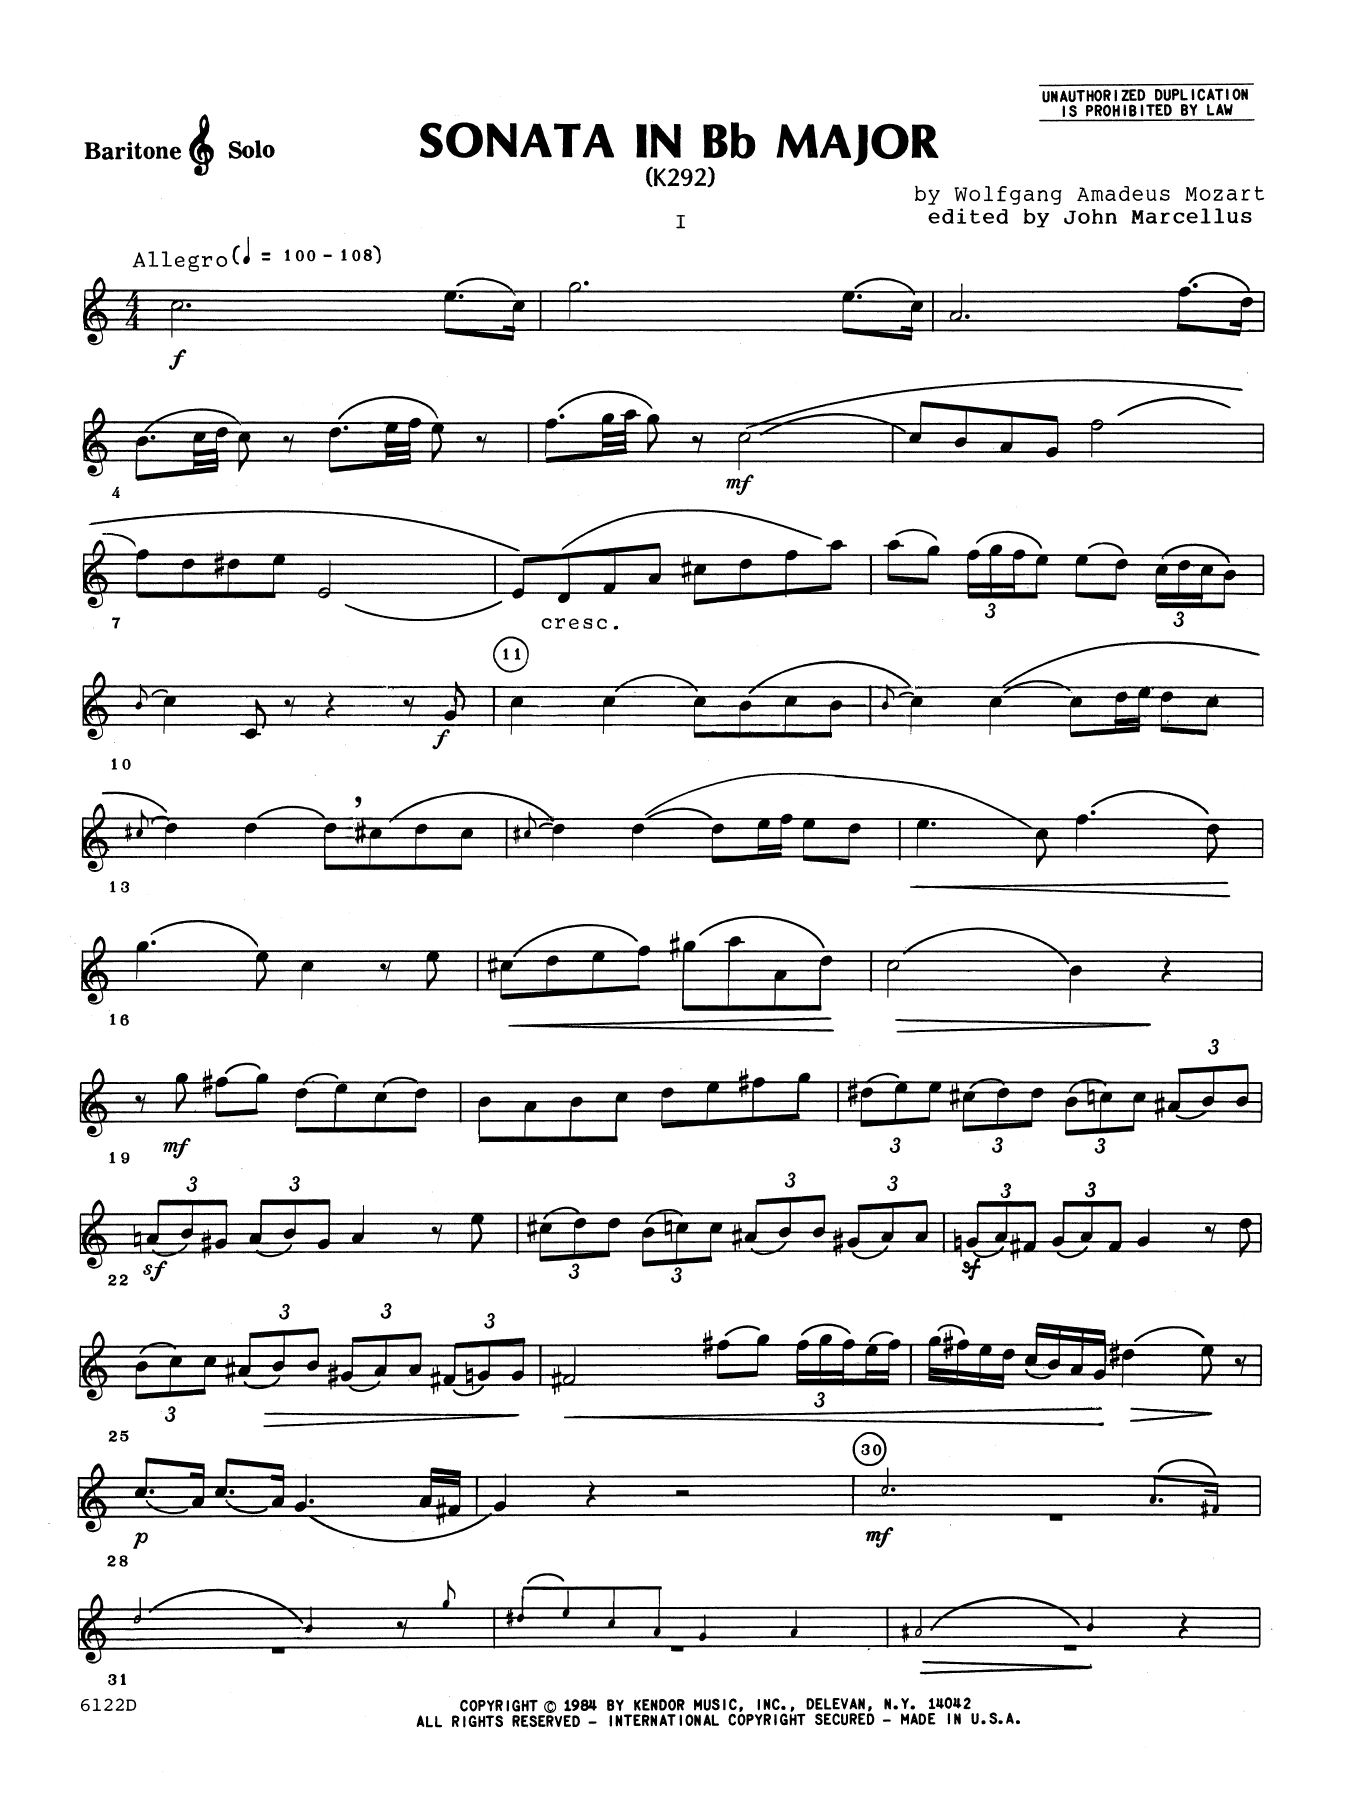 Download John Marcellus Sonata In Bb Major (K292) - Baritone T. Sheet Music